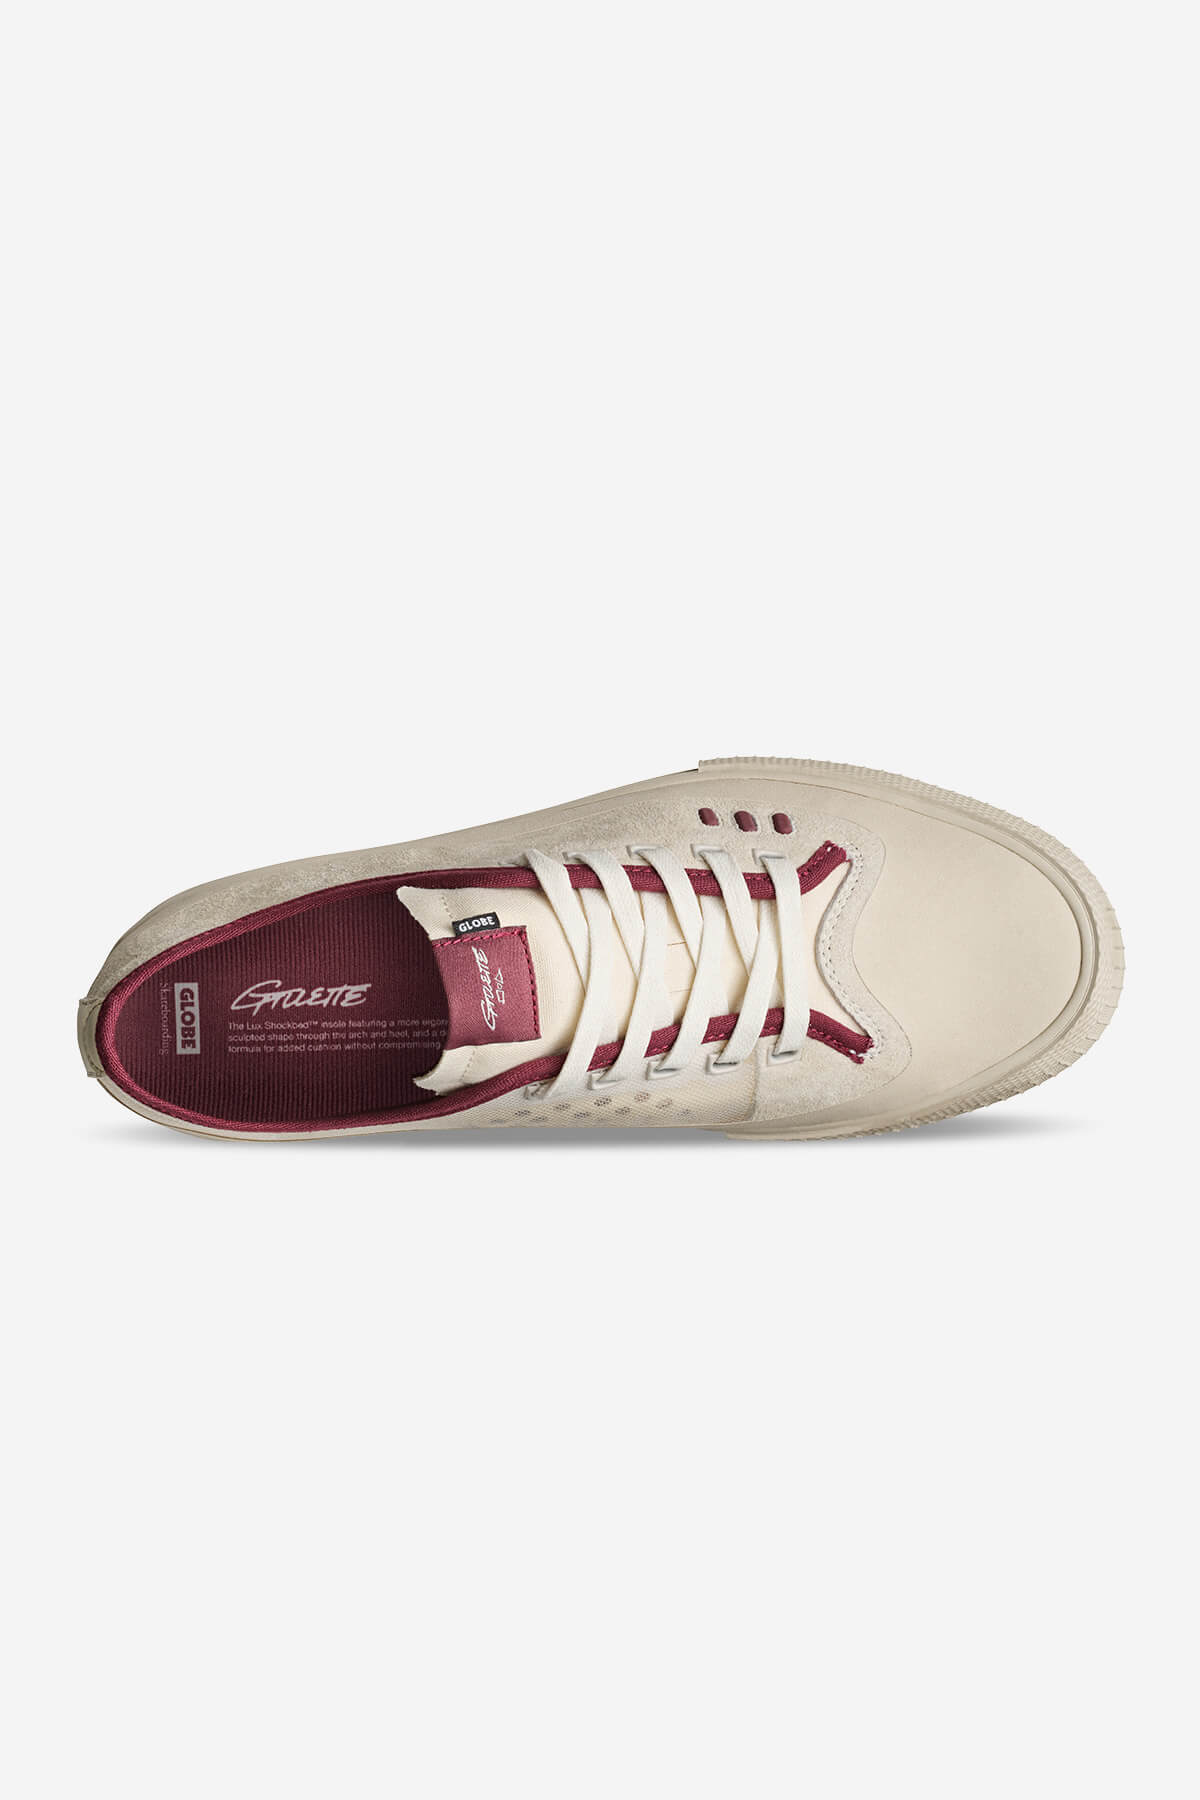 Globe - Gillette - Cream/Pomegranate - skateboard Schuhe